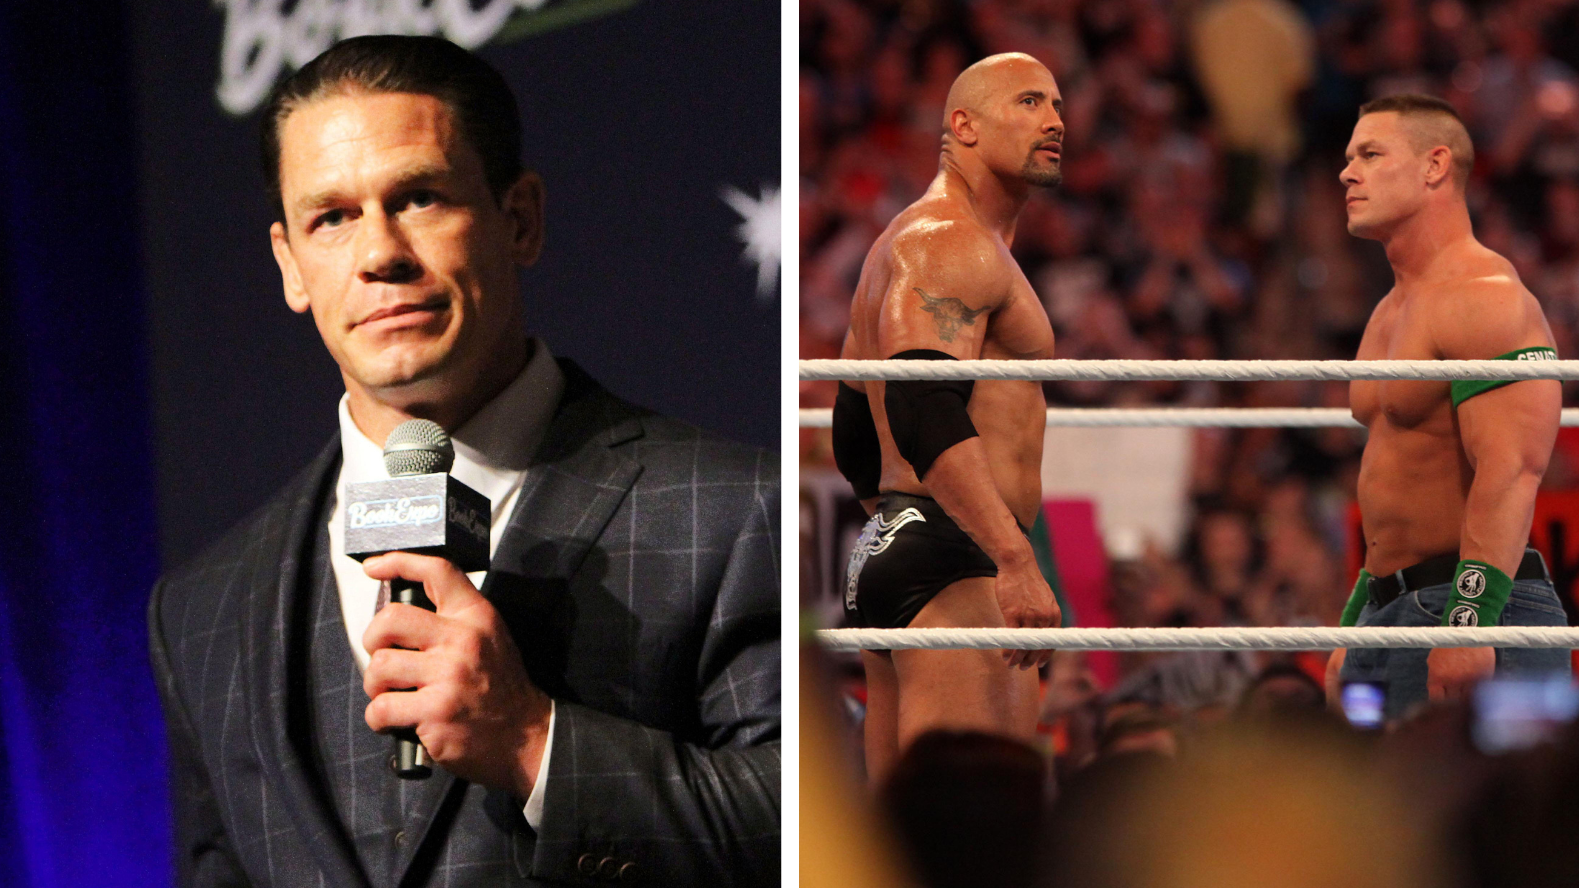 UFC Star Conor McGregor Praises WWE Legend John Cena: A Surprising Turn in Their Hollywood and Sports Saga